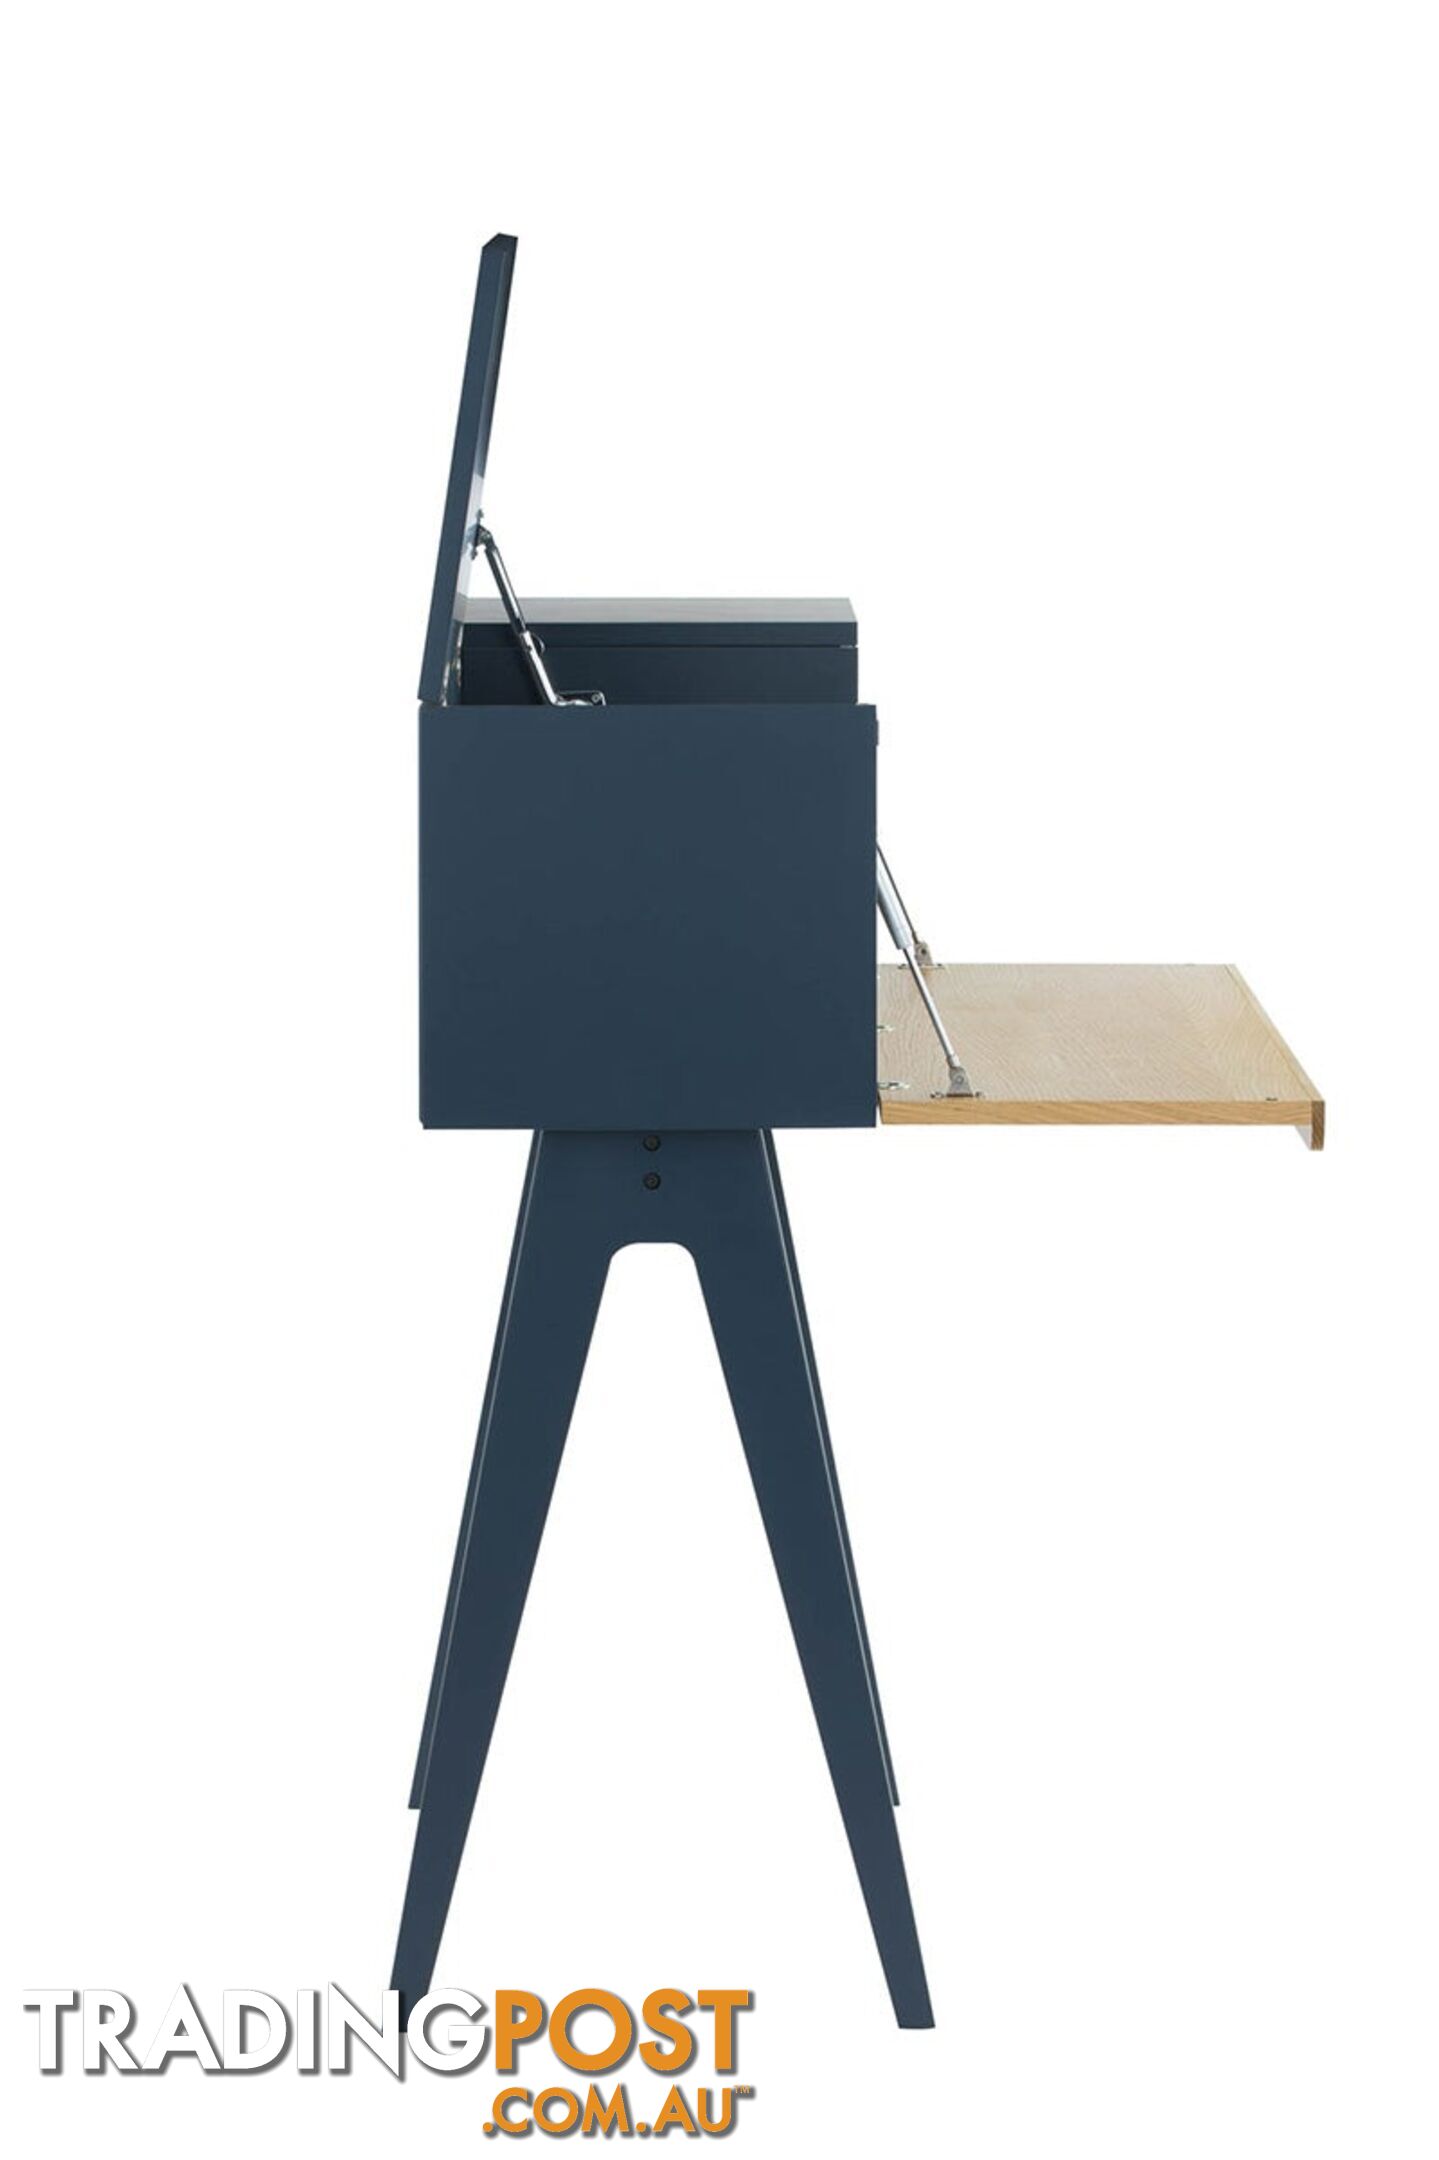 VALEN Study Desk 96cm - Blue Space & Oak - 123004 - 9334719004563